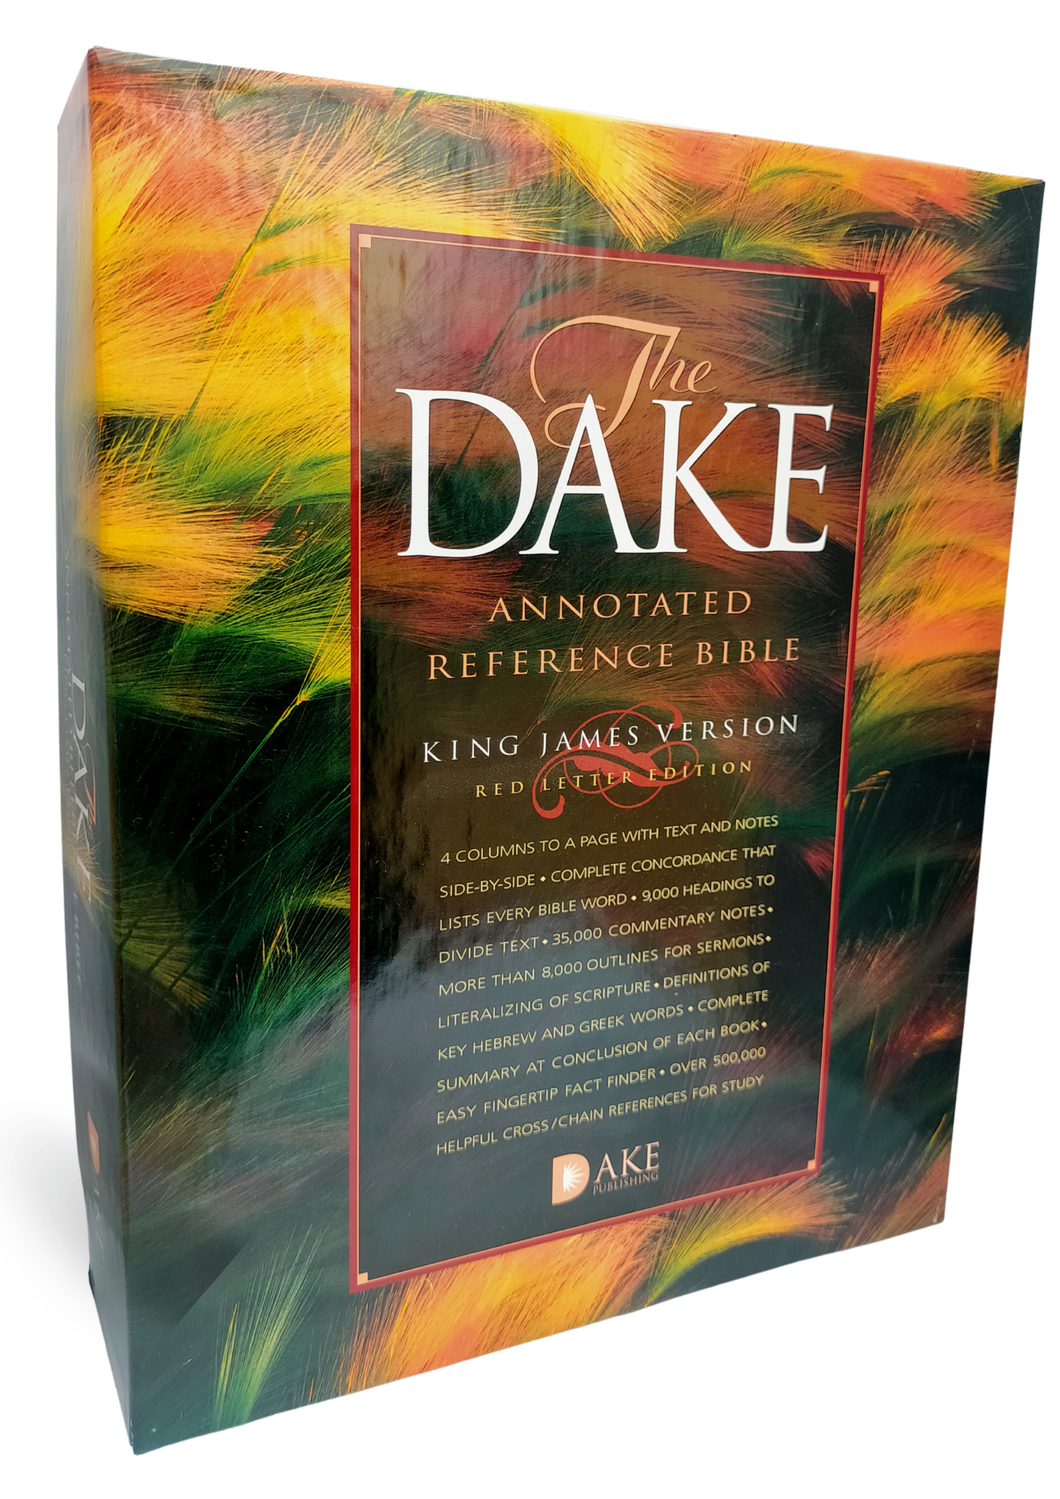 Dake Annotated Reference Bible KJV Bonded Leather Black.